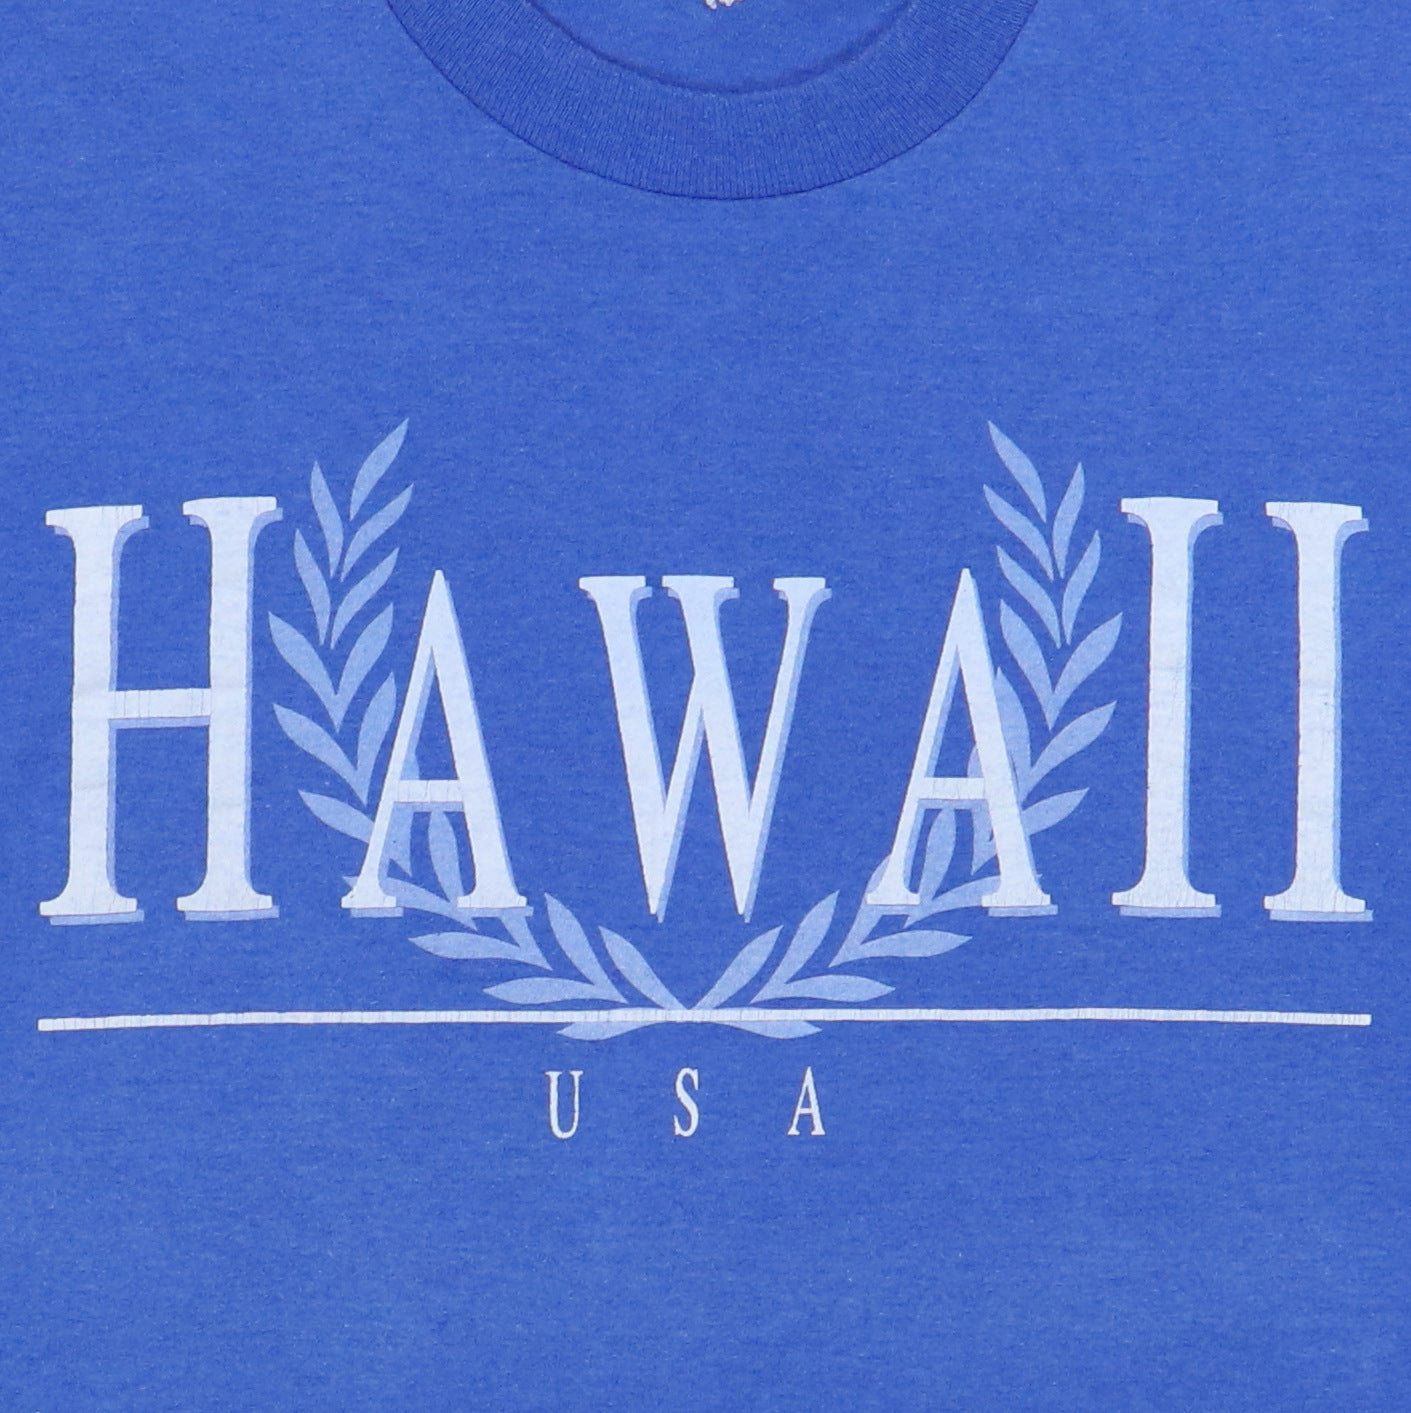 1980s Hawaii Shirt